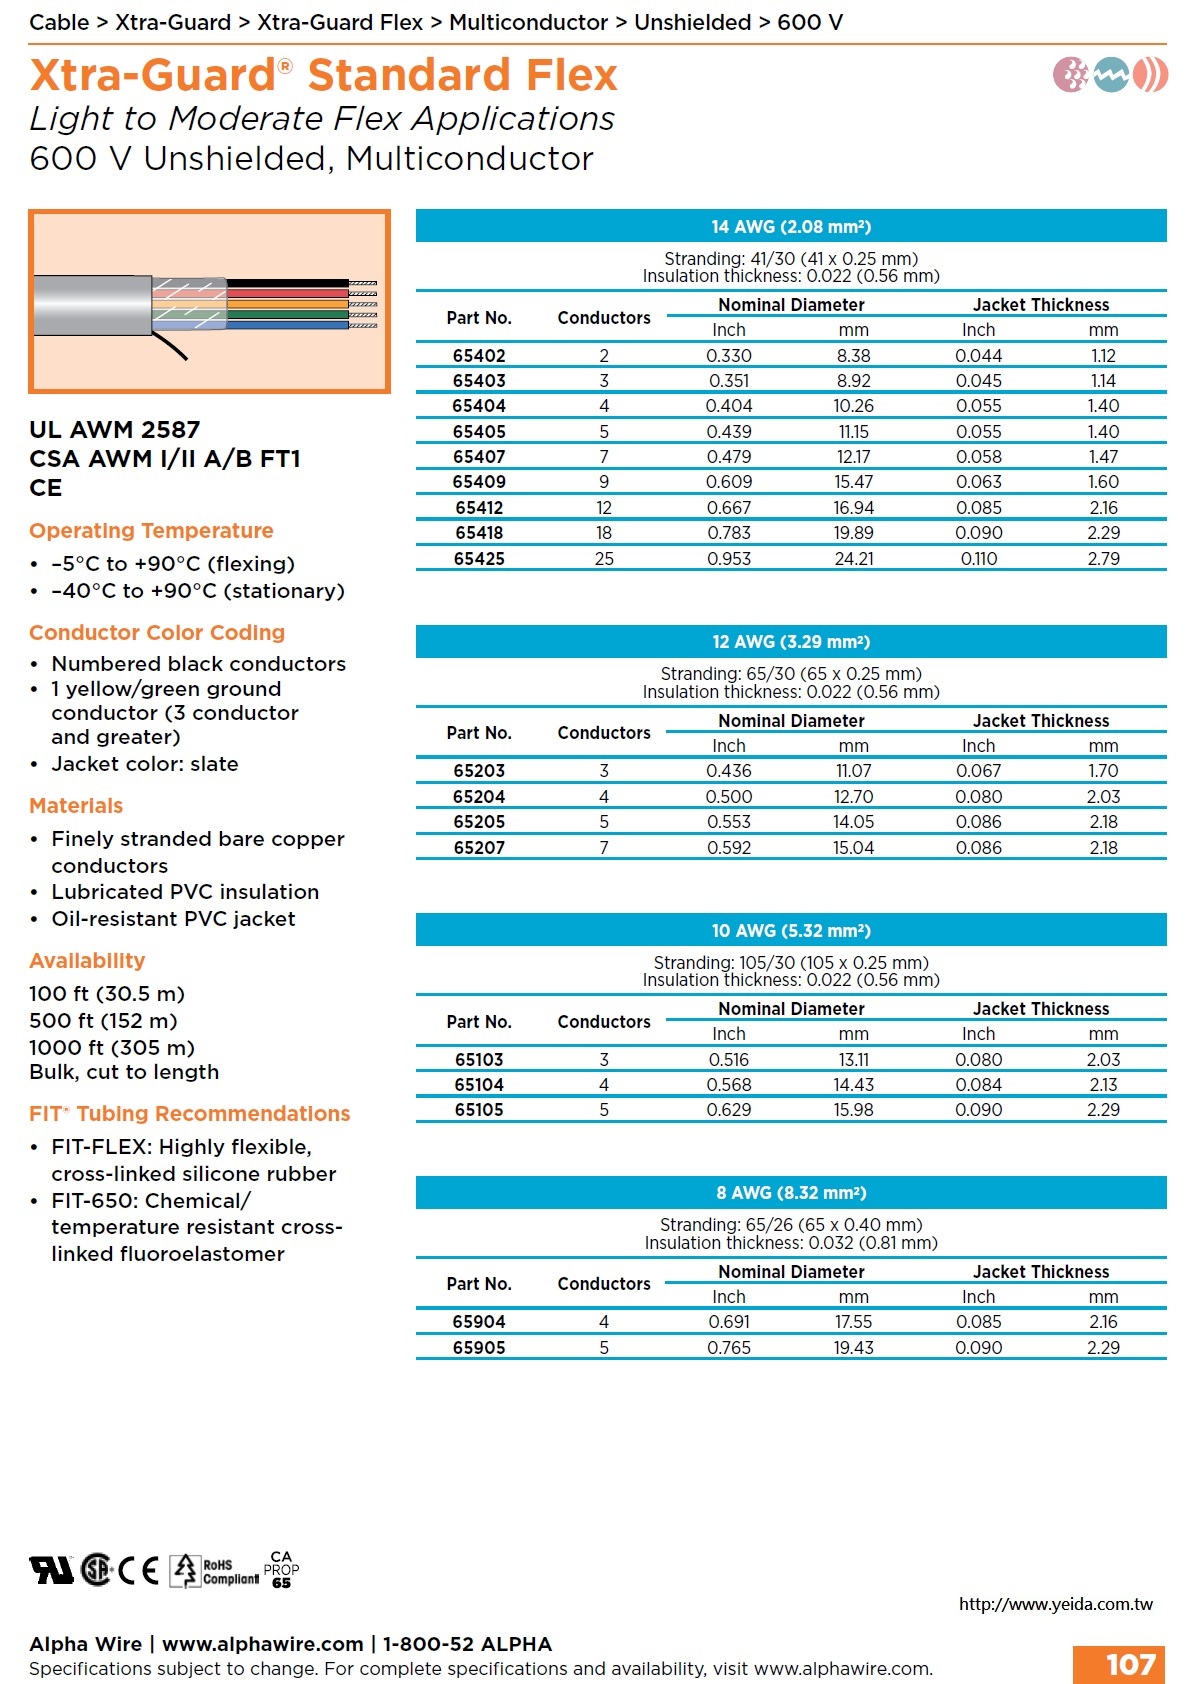 ALPHA Xtra-Guard® Standard Flex Control Cable 標準柔性高性能控制電纜 UNSHIELDED UL2587 Light-to-Moderate Flex Control